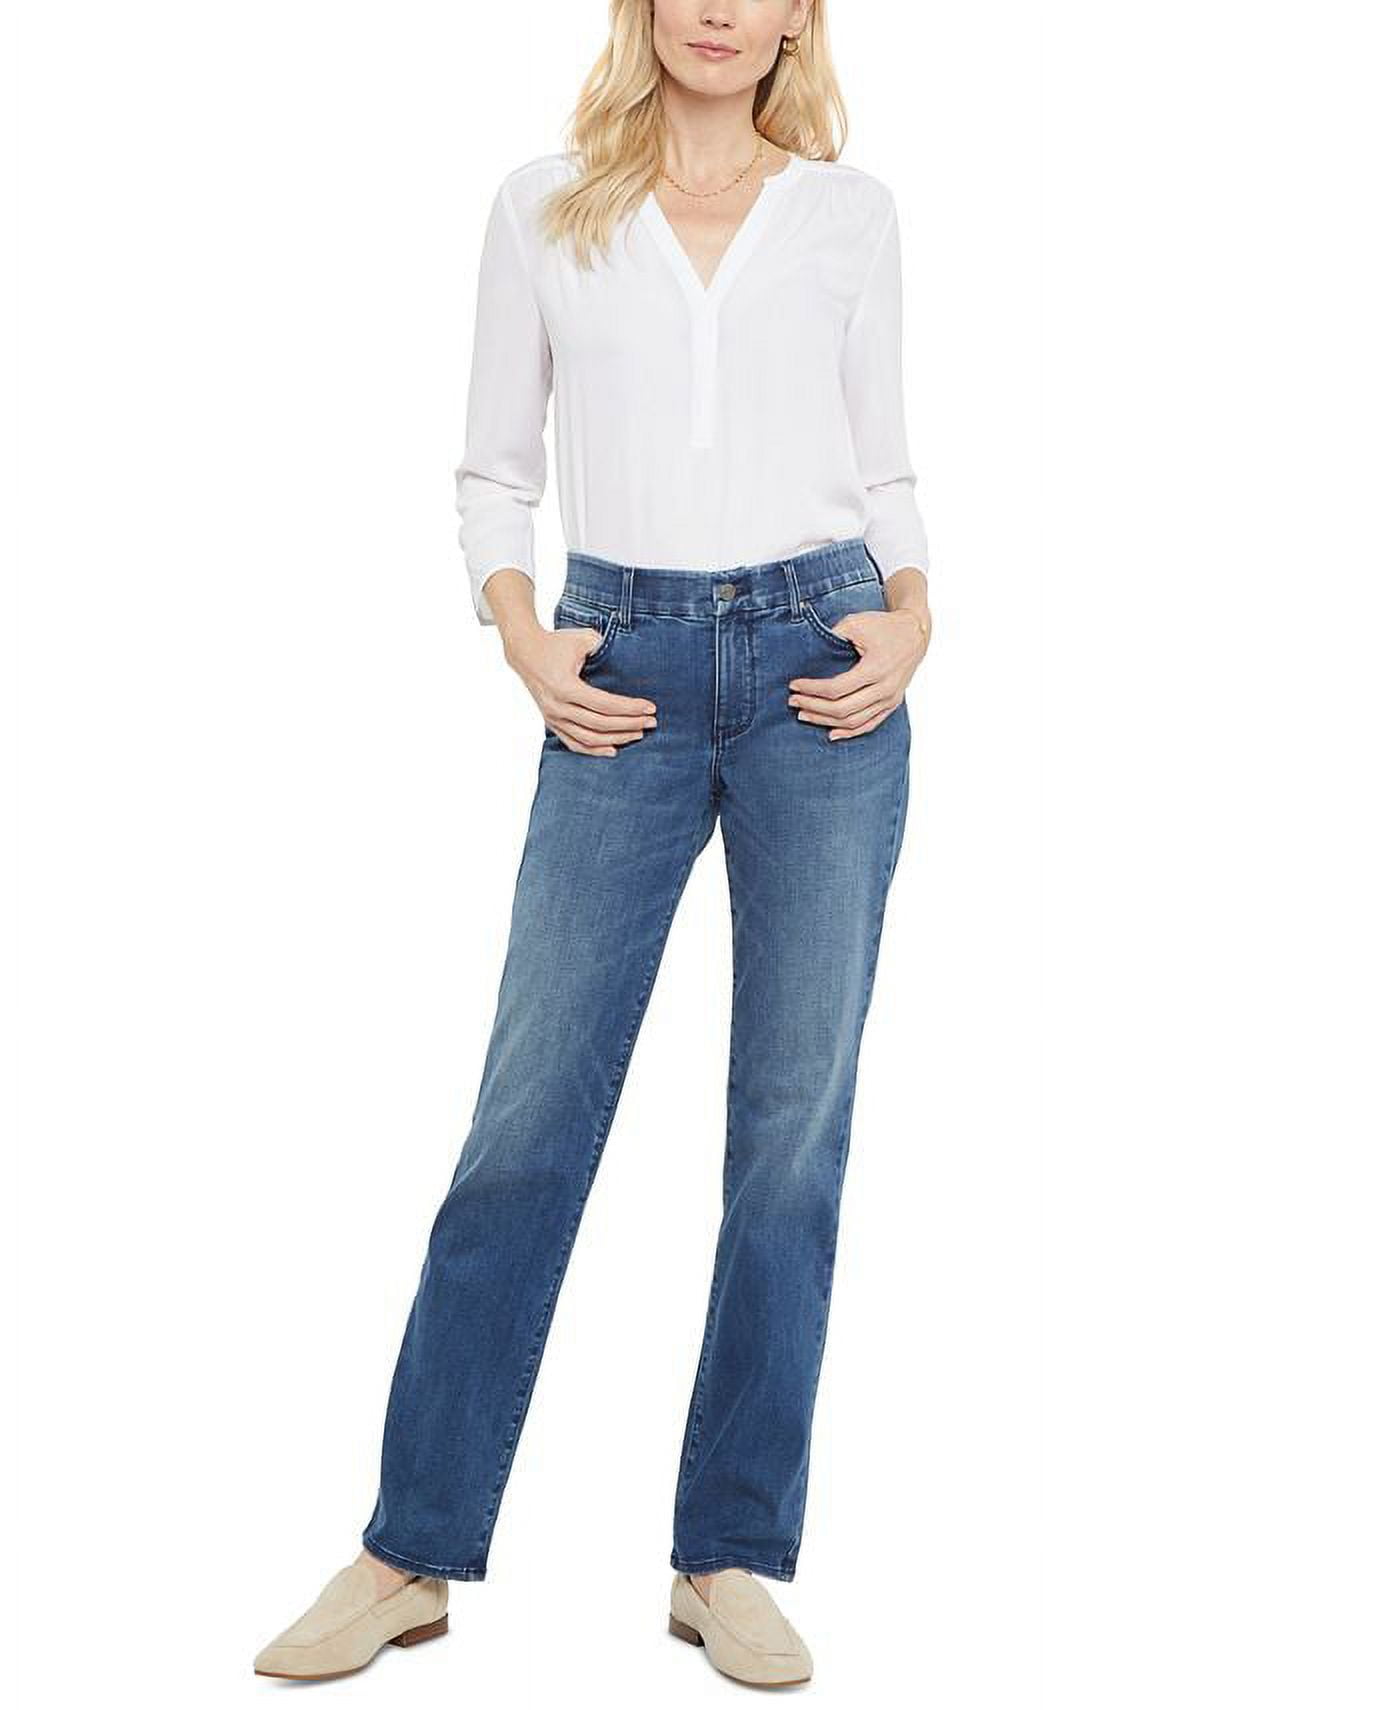 Classic Rhinestone Premium Women's Stretch Skinny Fit BLUE Denim Jeans Pants